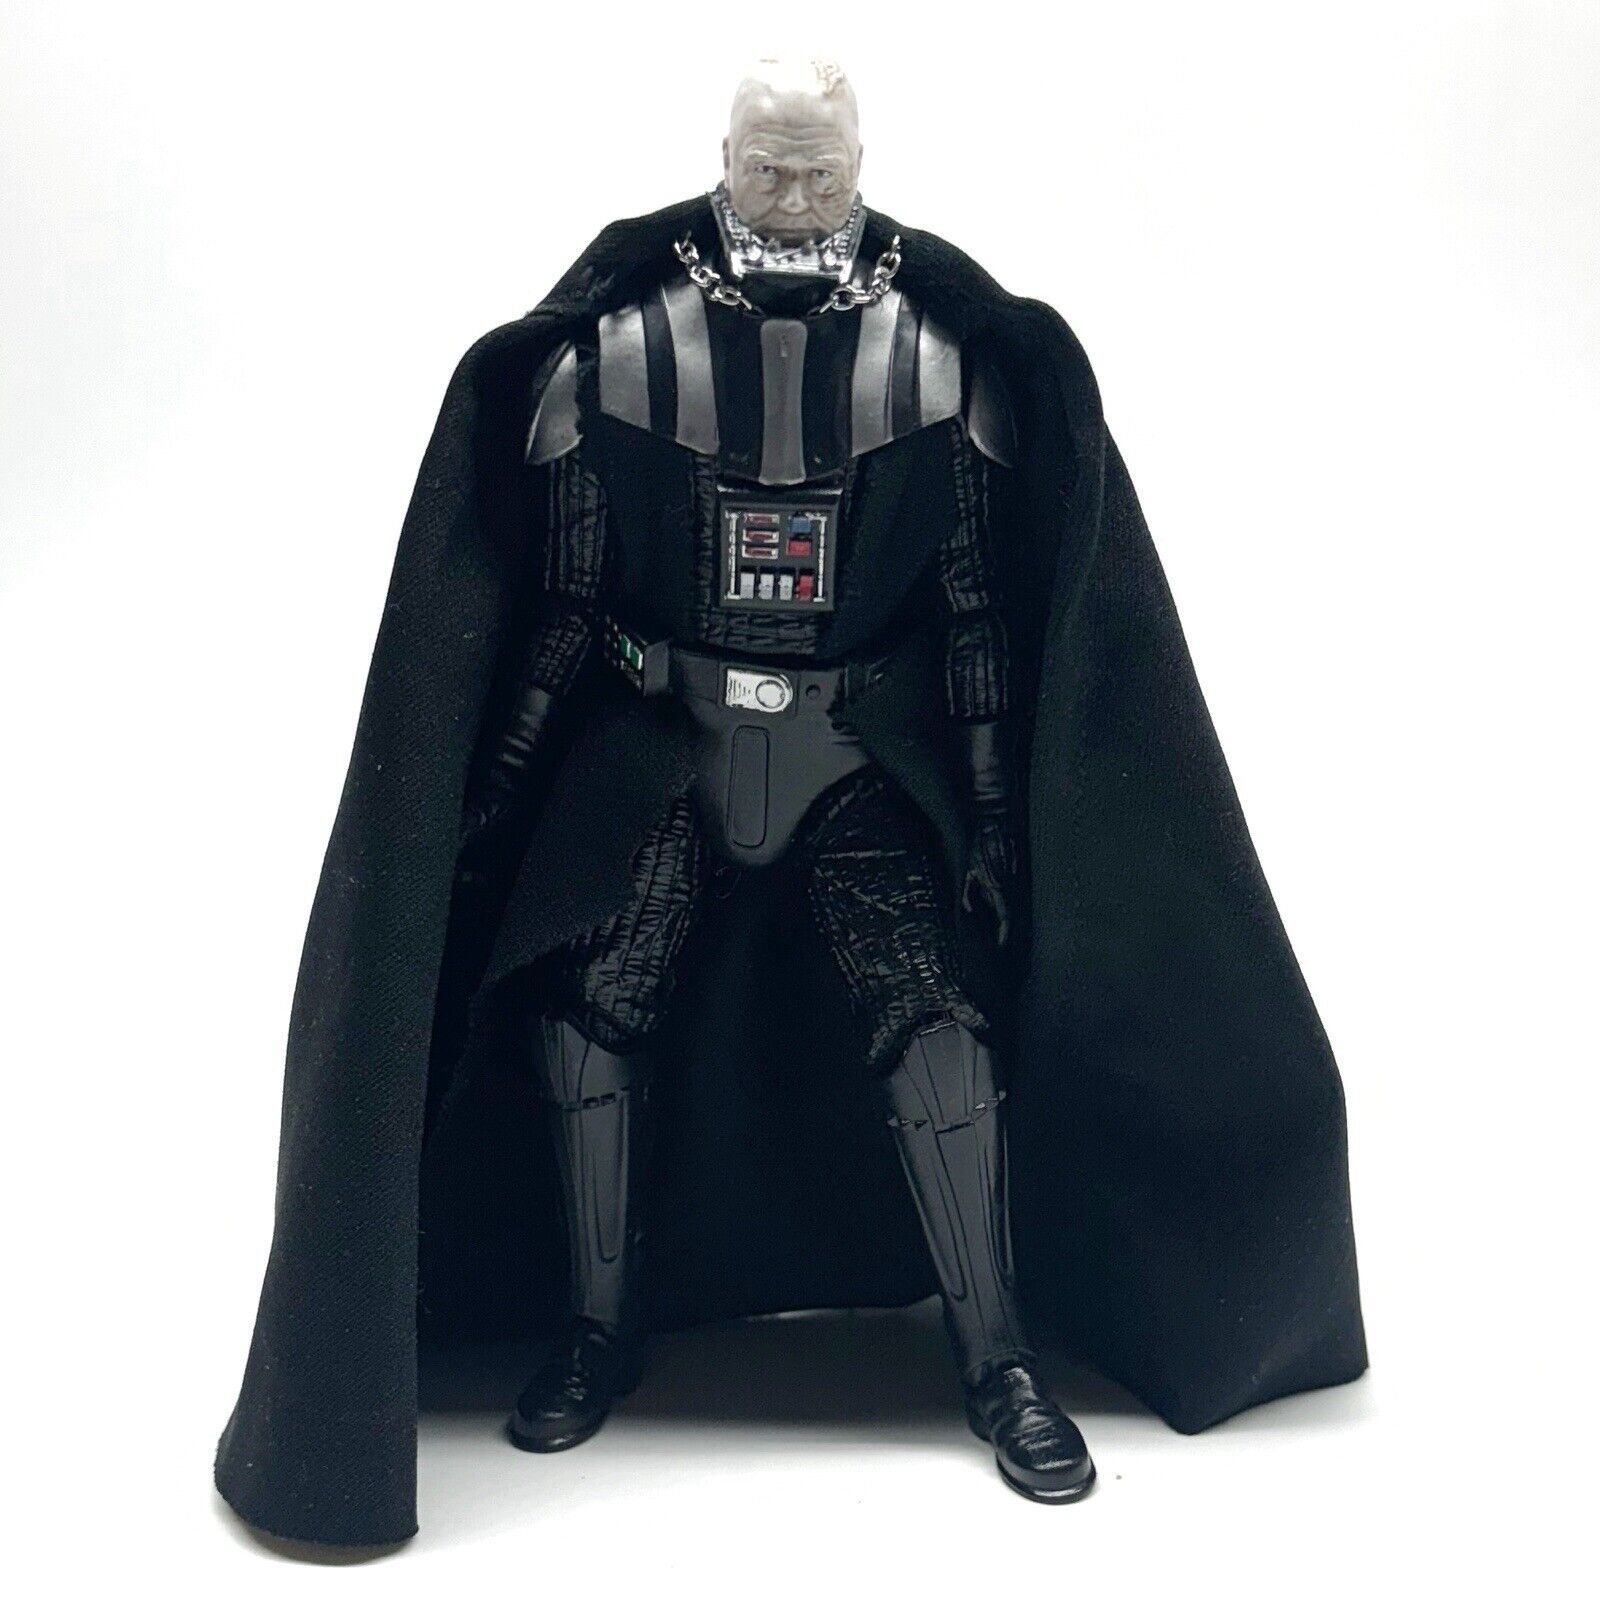 Star Wars Black Series Return of the Jedi Darth Vader 40th Anniversary Figure